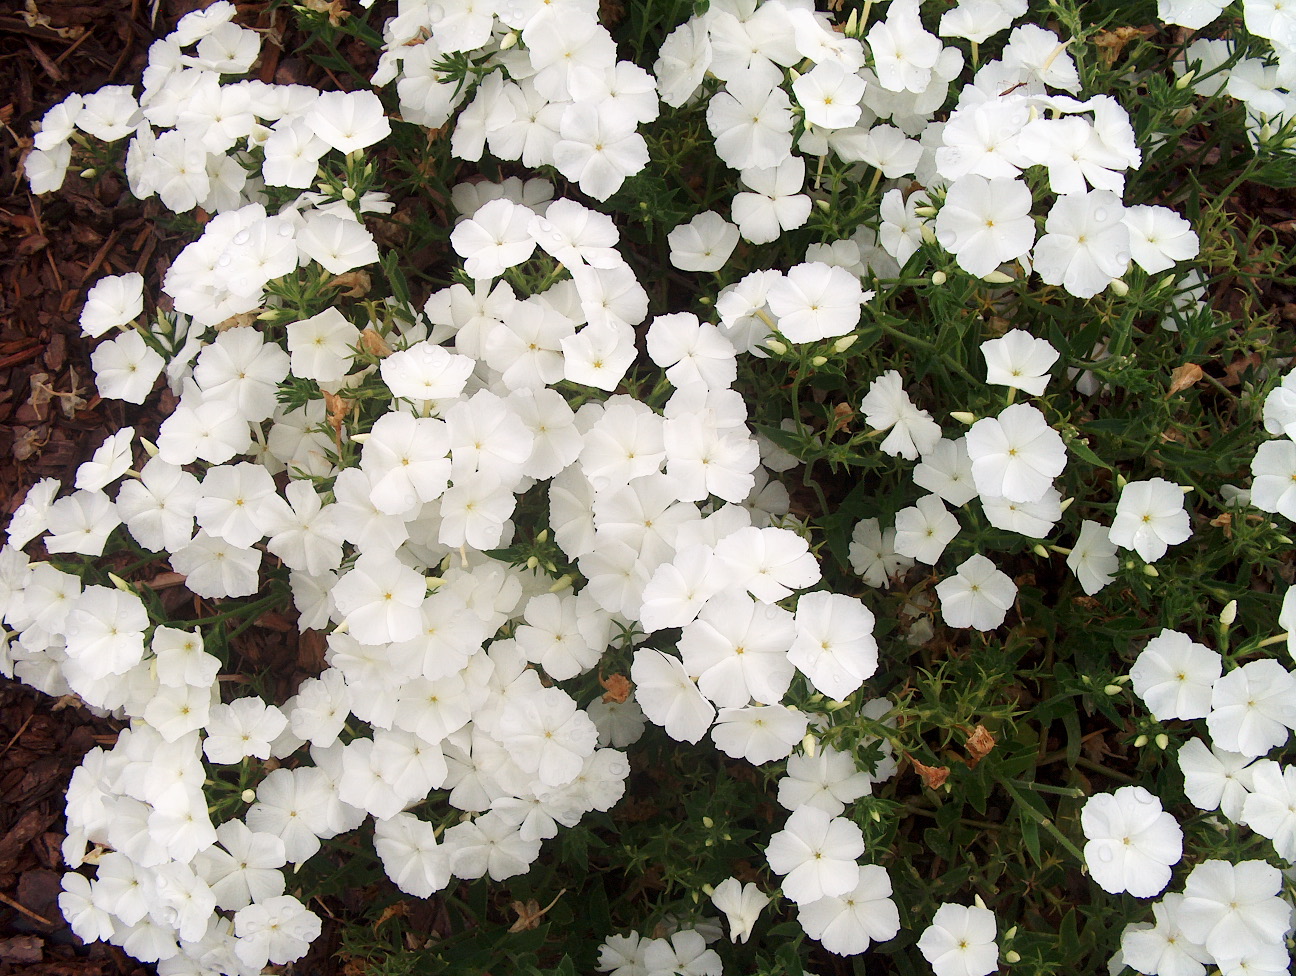 Phlox 'Intensia White'  / Intensia White Petunia